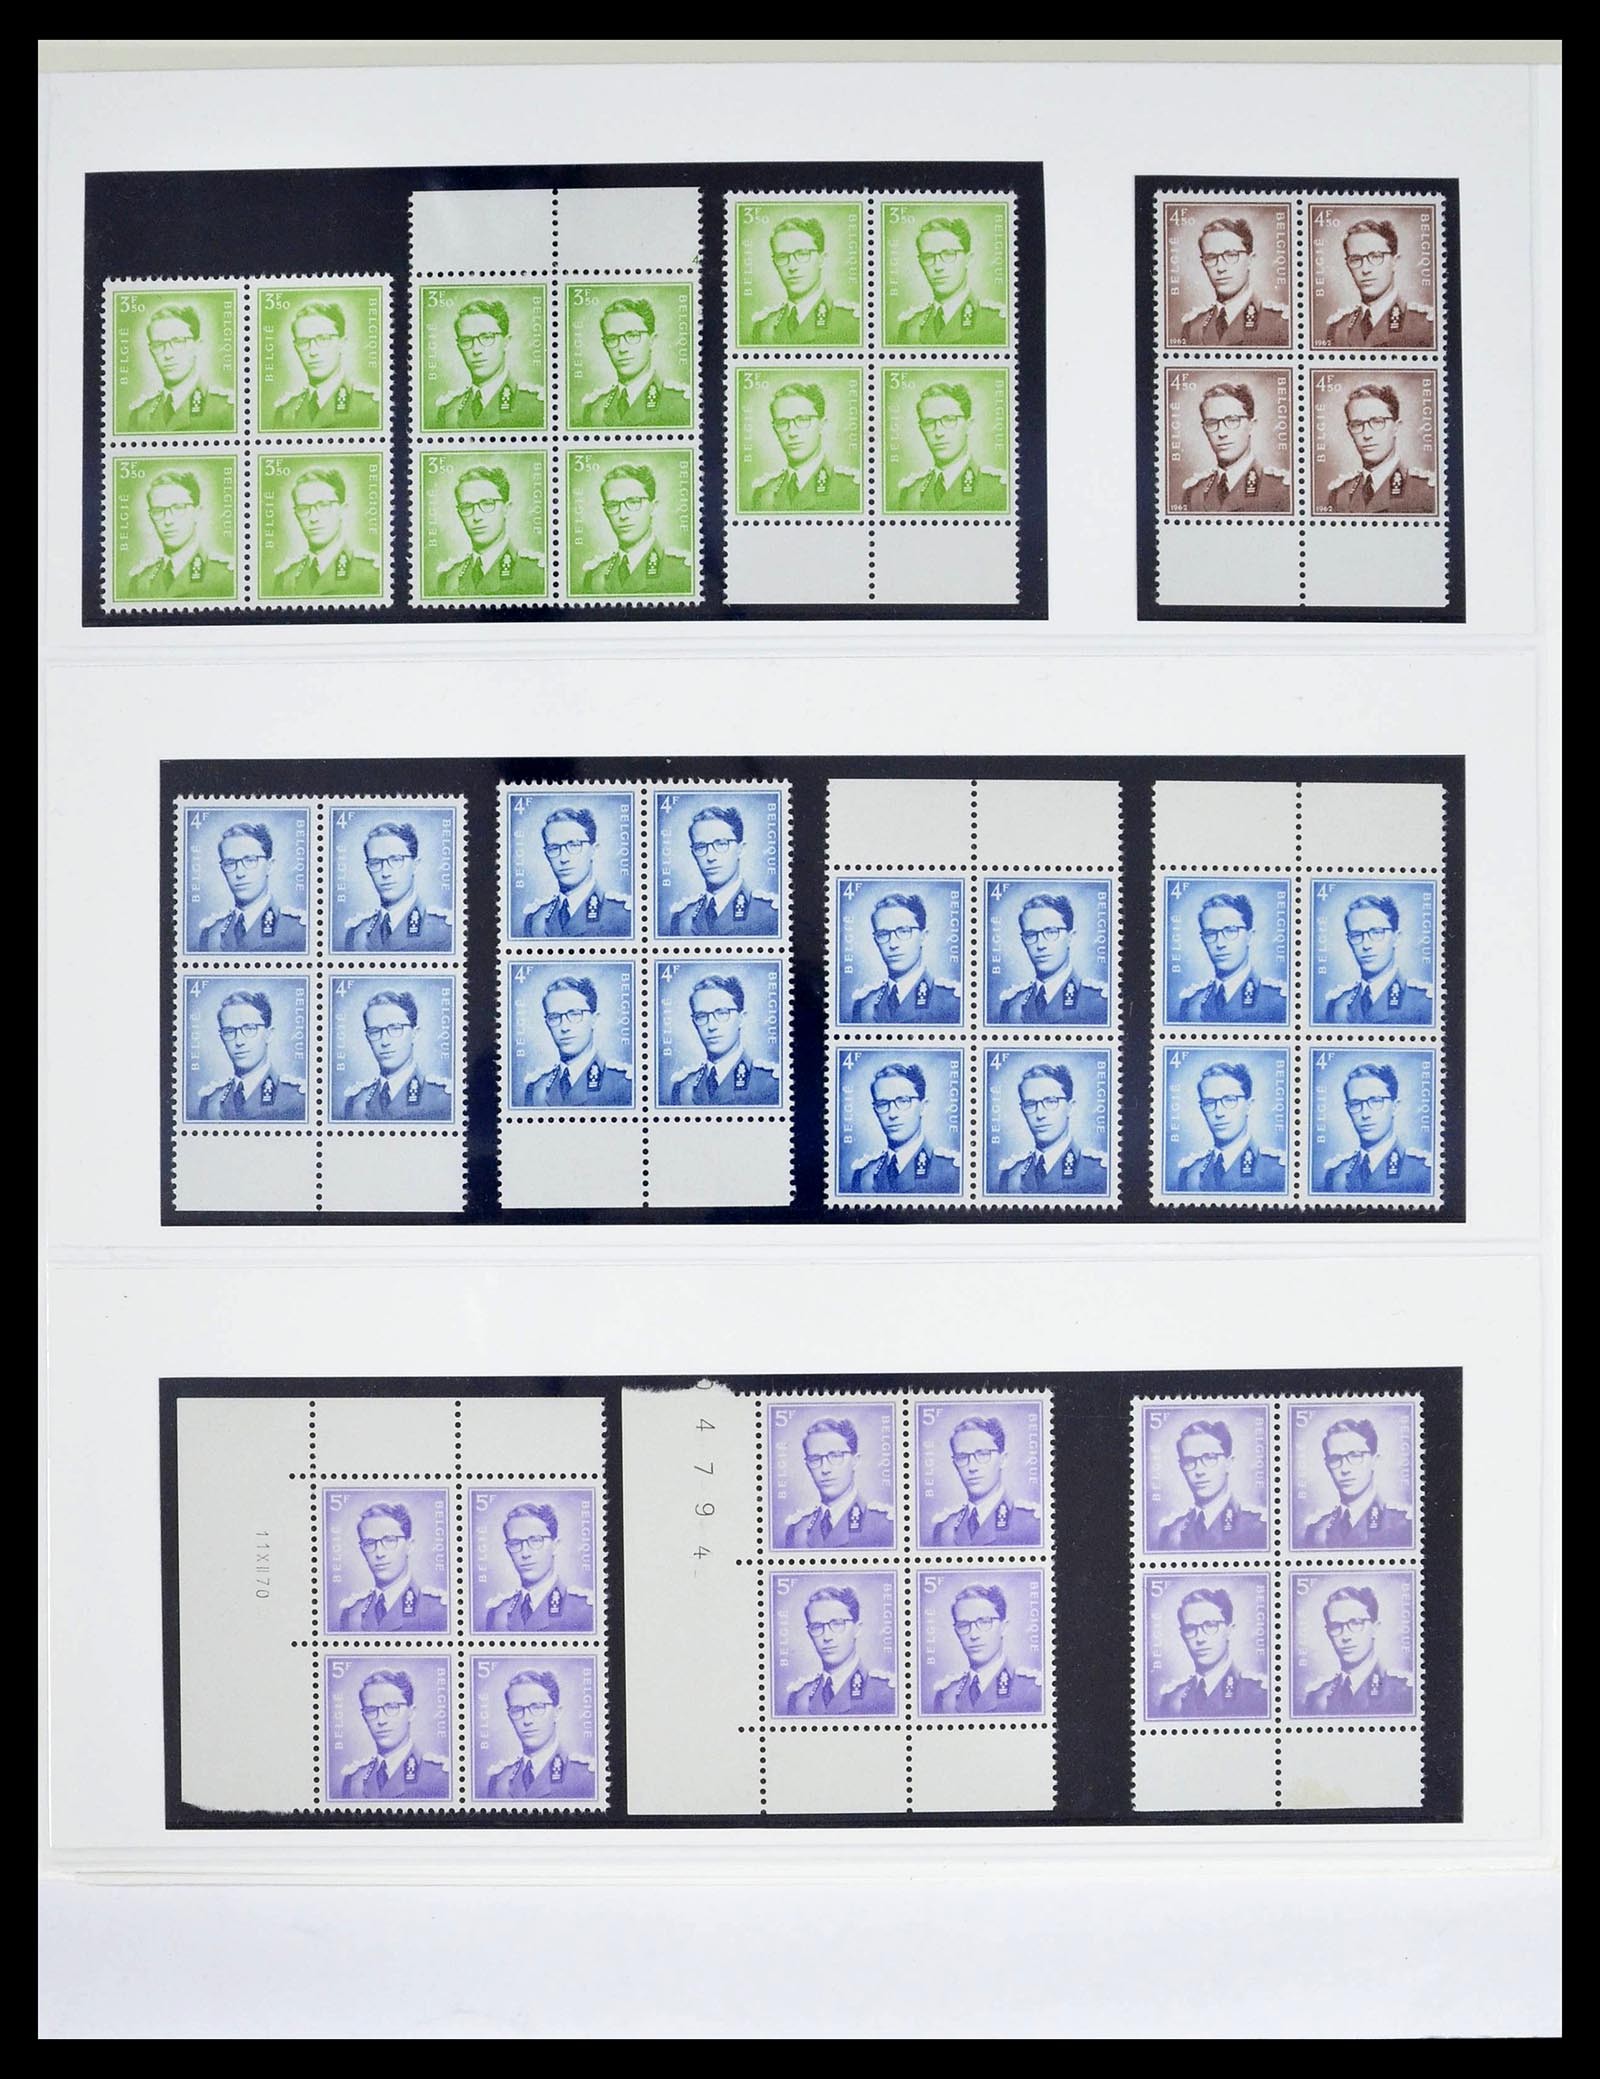 39229 0028 - Stamp collection 39229 Belgium Boudewijn with glasses 1952-1975.